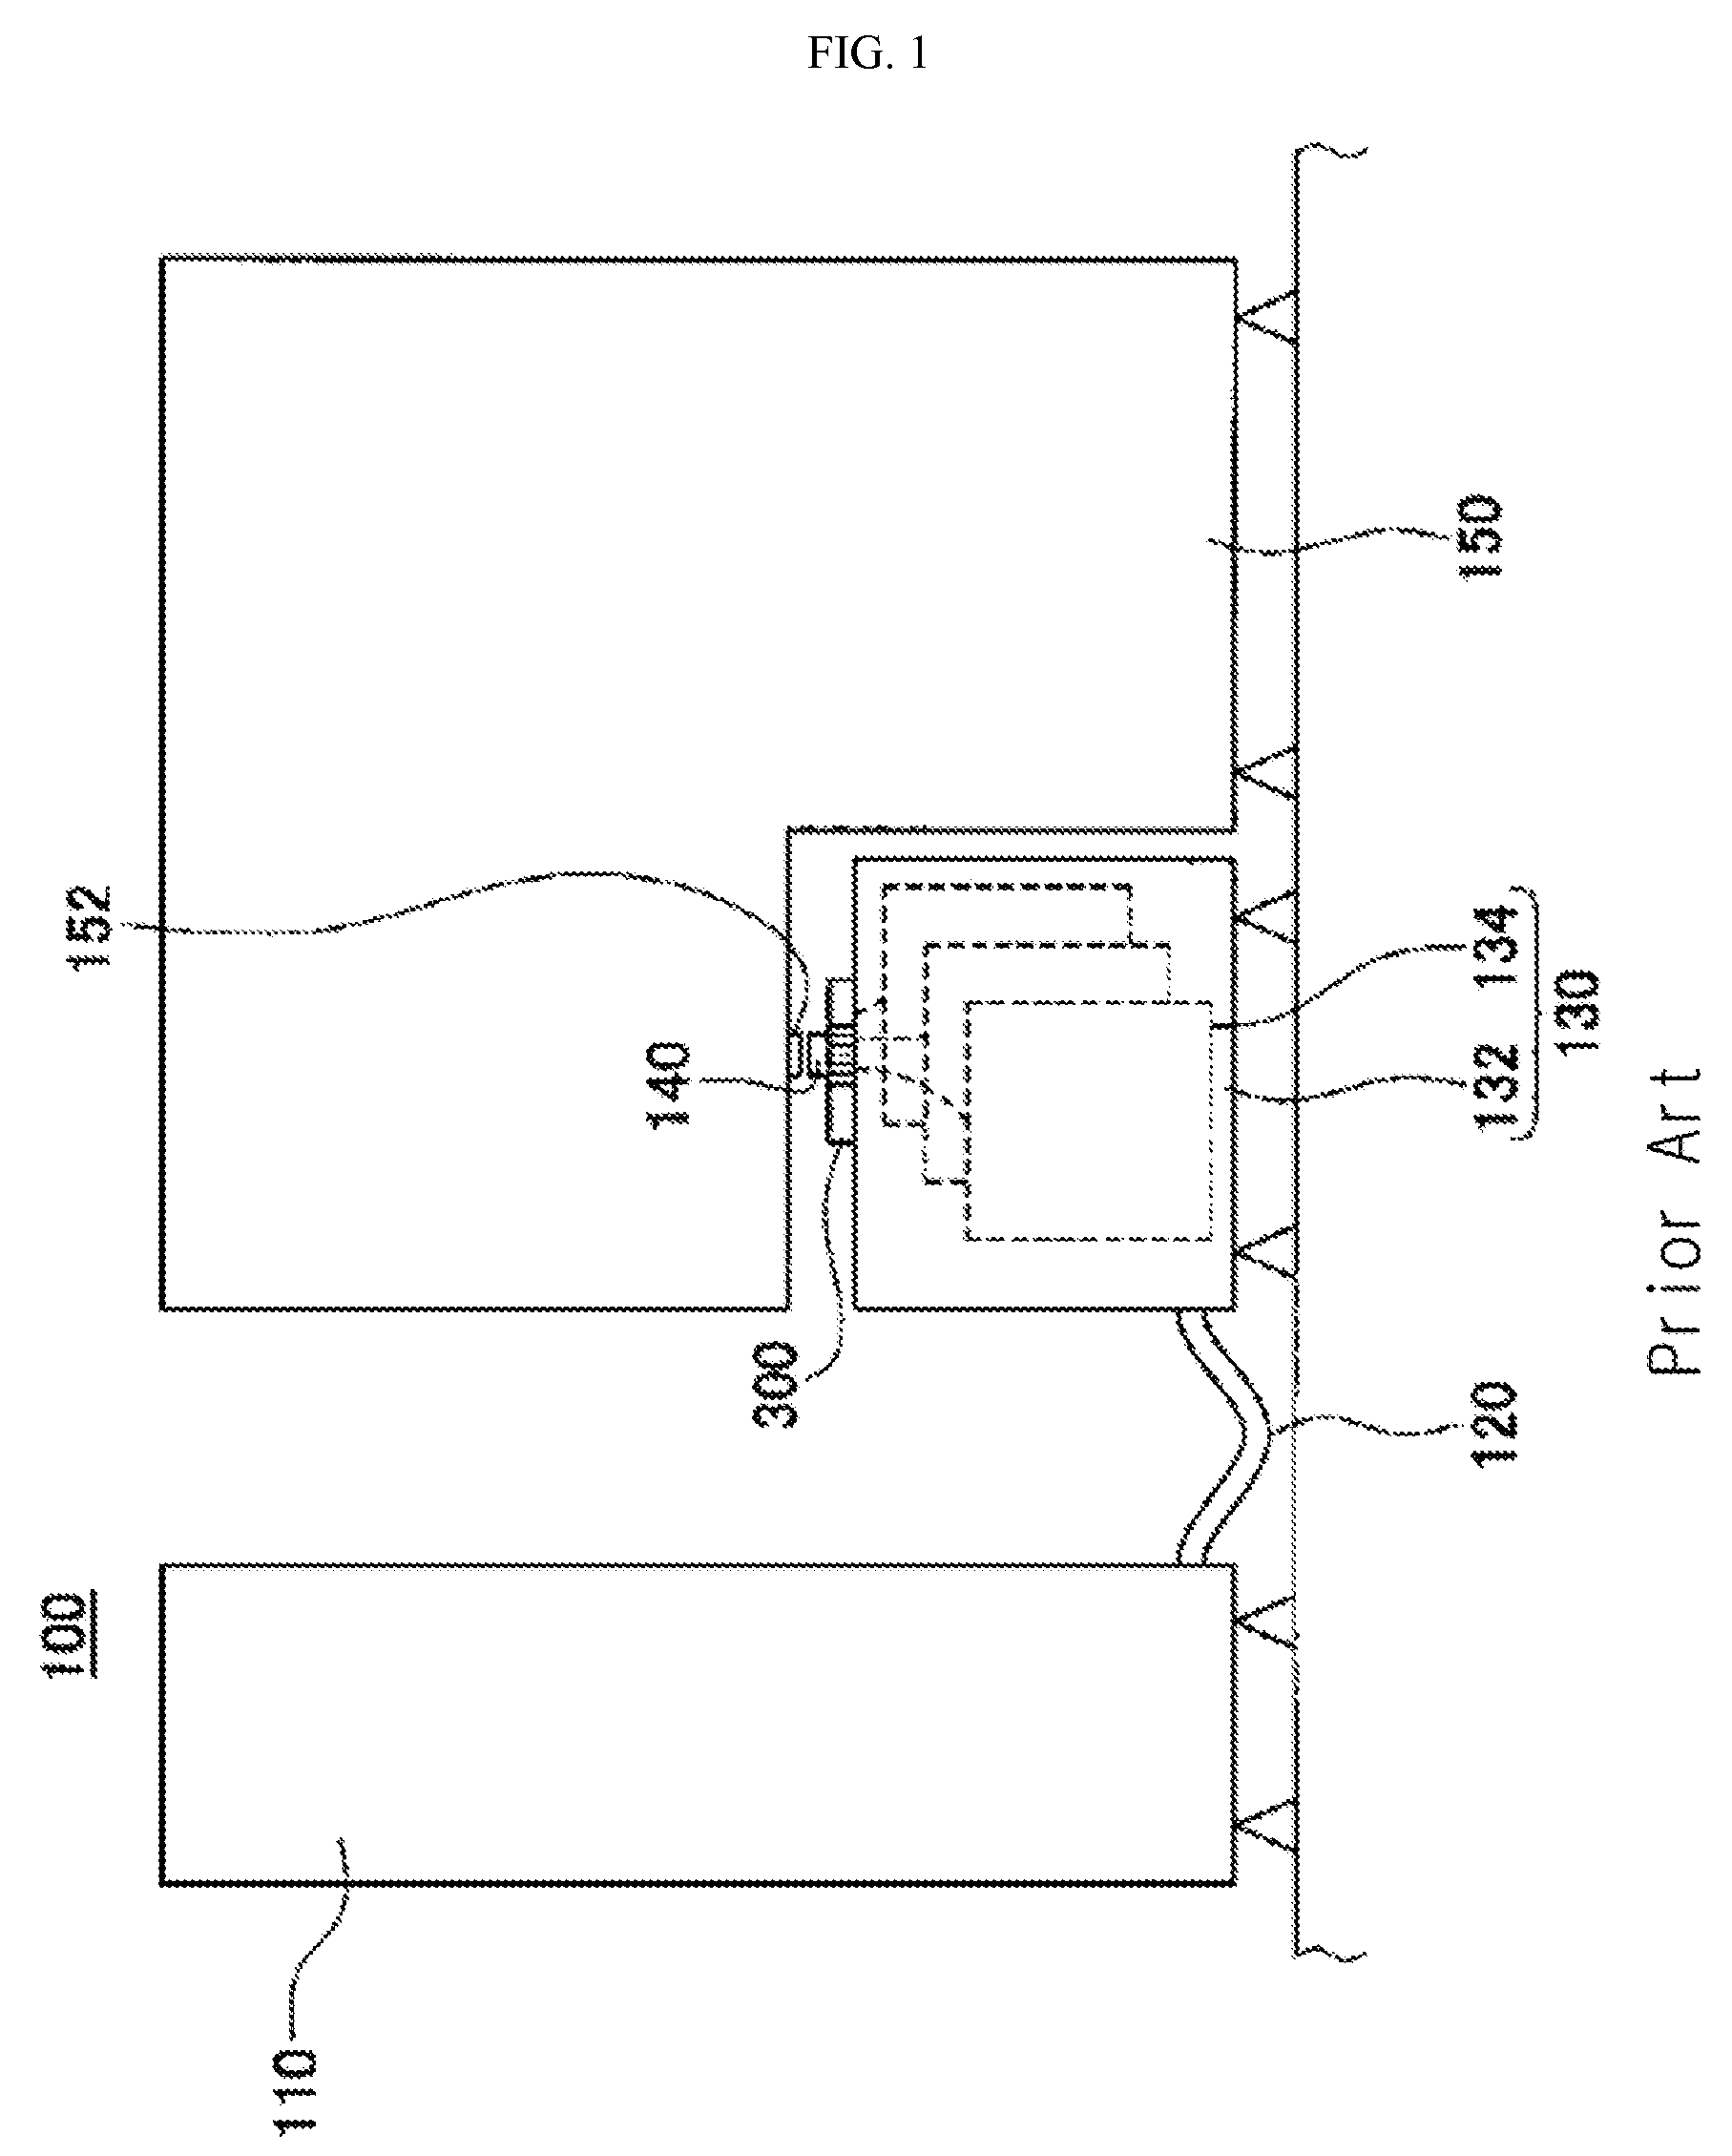 Semiconductor testing apparatus